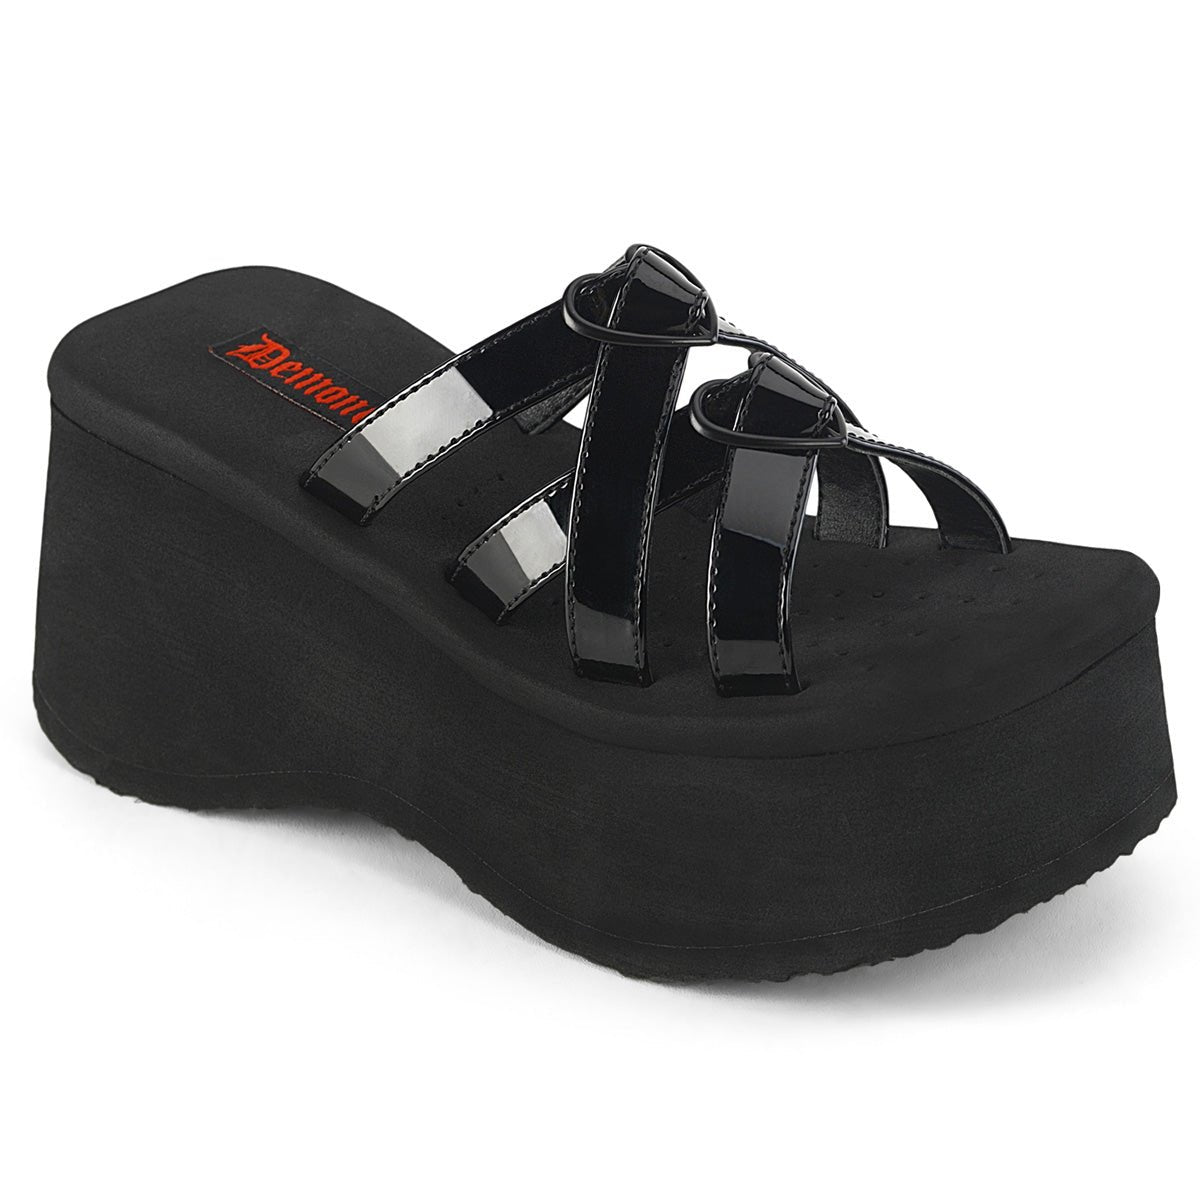 Too Fast | Demonia FUNN-15 | Black Patent Leather Sandals